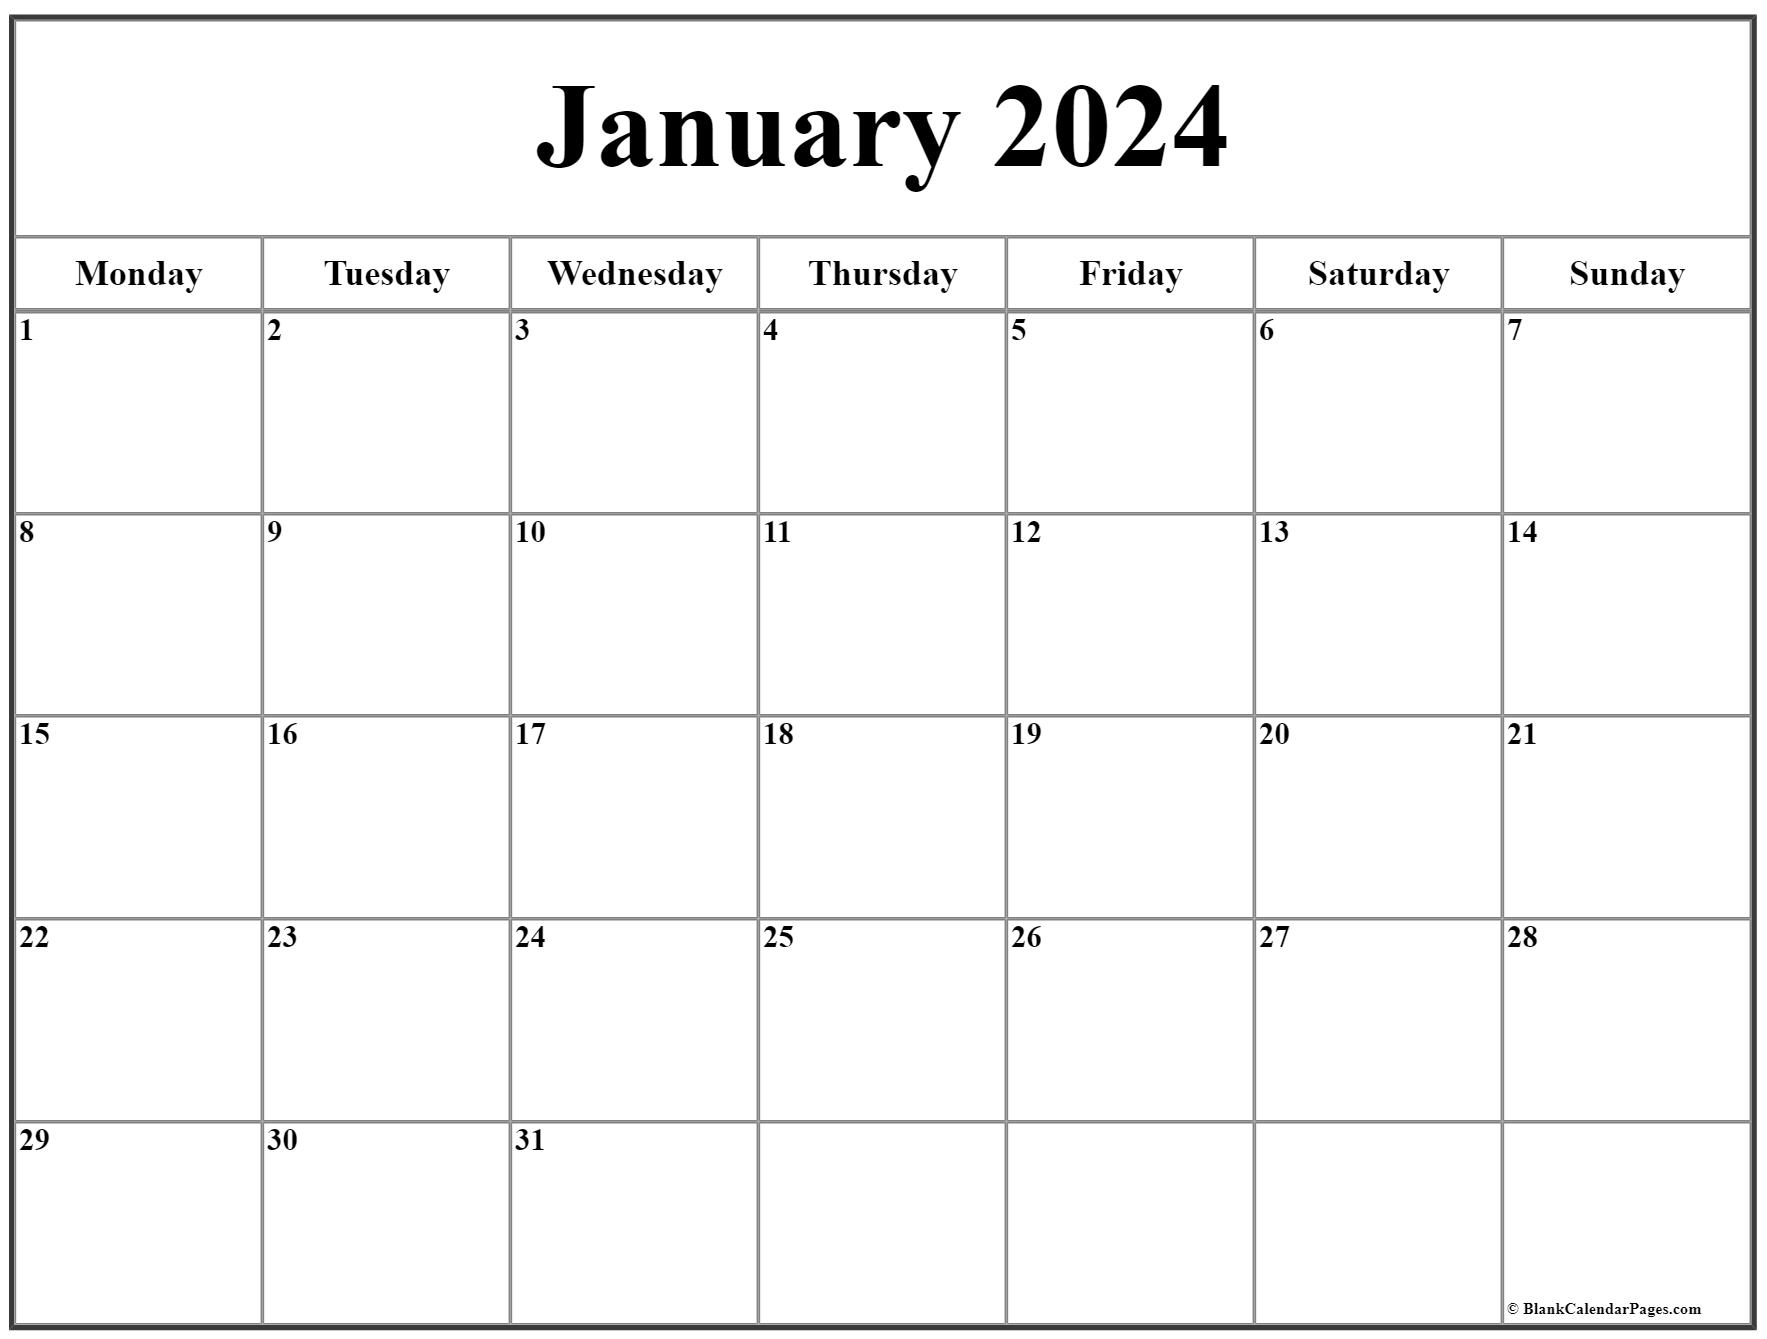 printable-calendar-2023-monday-to-sunday-get-calendar-2023-update